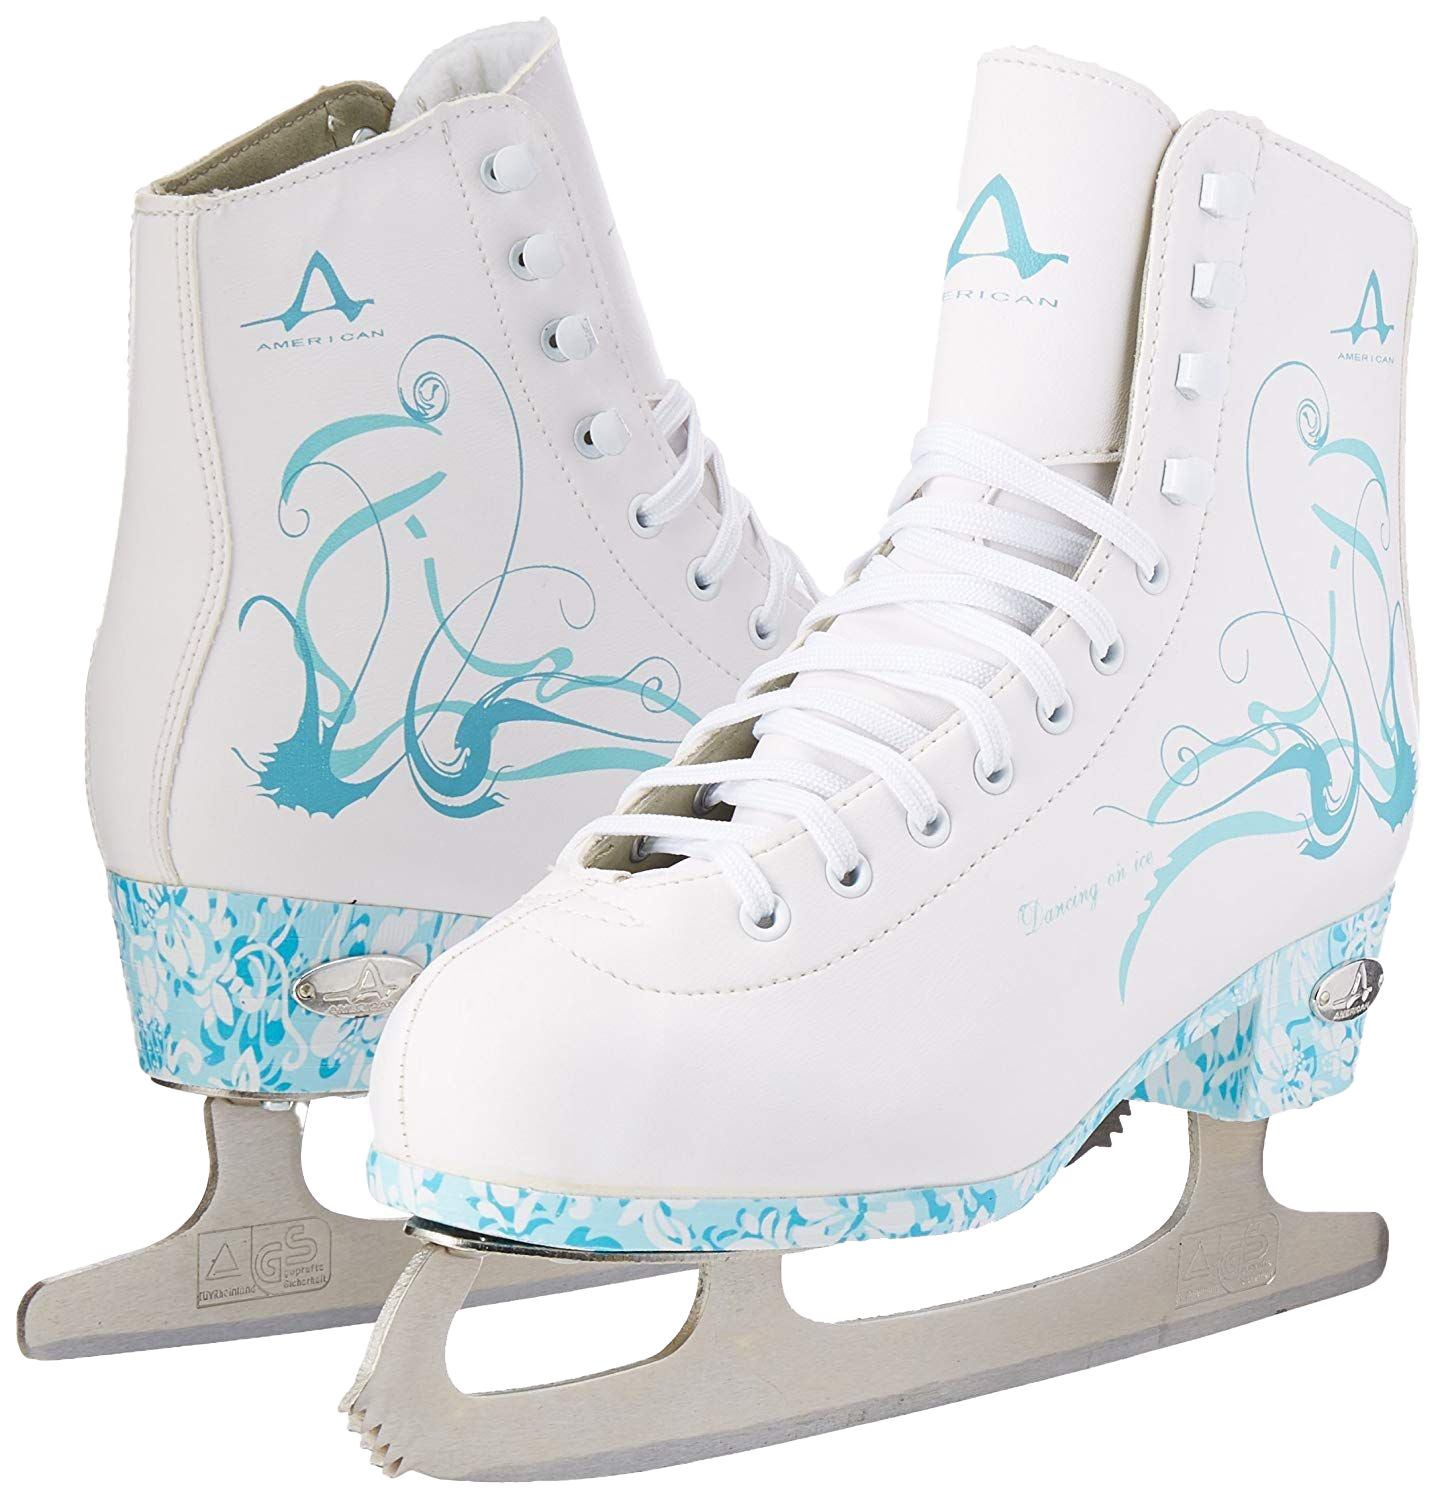 Girl Ice Skating Shoes PNG Transparent Image